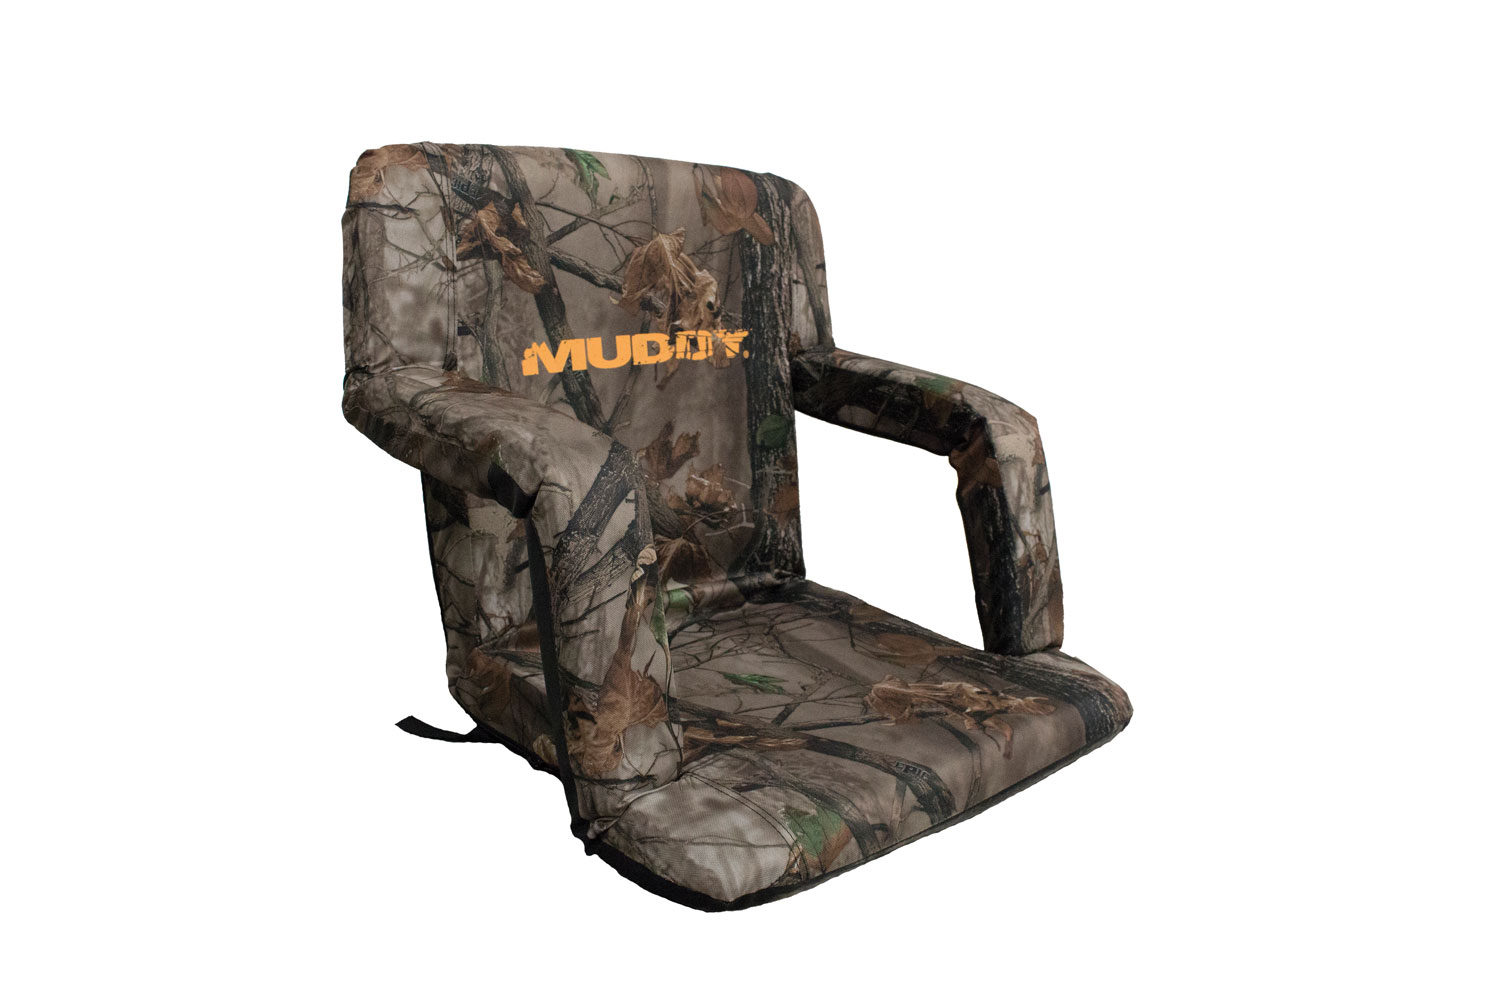 Muddy MUD-GS1206 Deluxe Stadium Chair Bucket Chair Camo